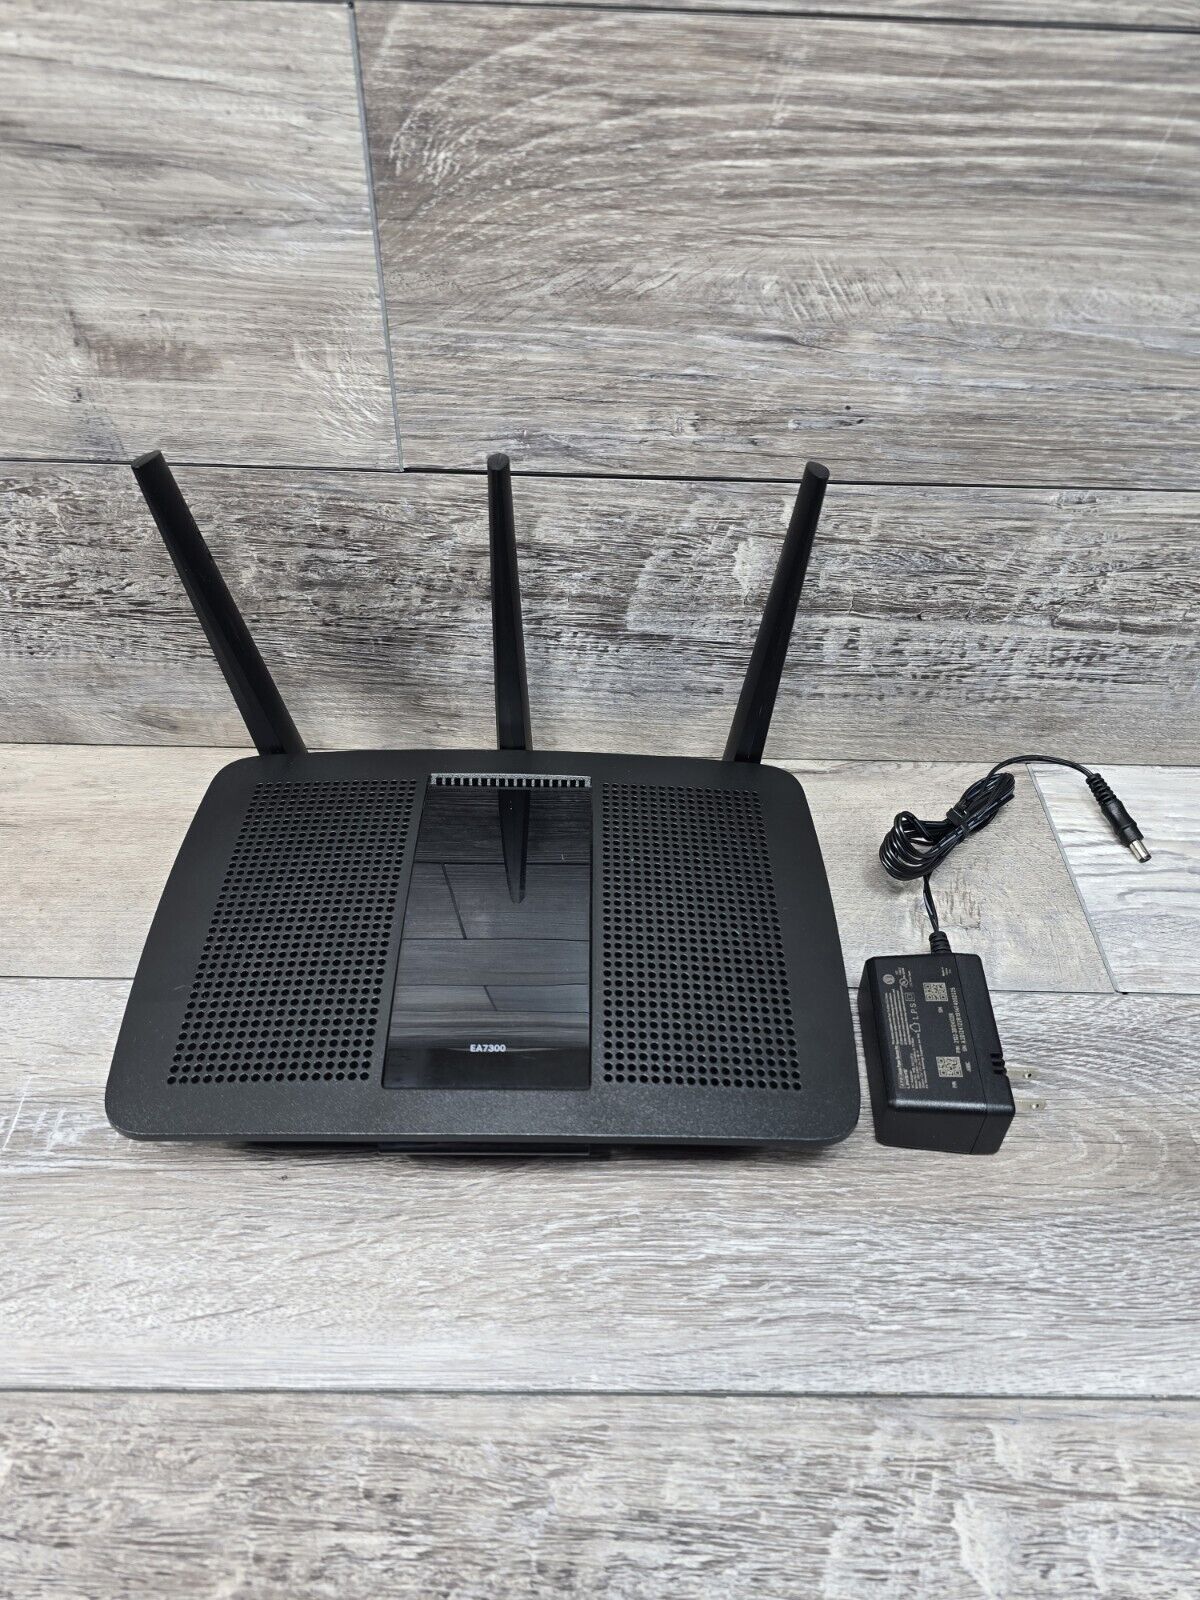 Linksys EA7300 V2 Max Stream AC1750 MU-MIMO Gibabit Wireless Router Tested